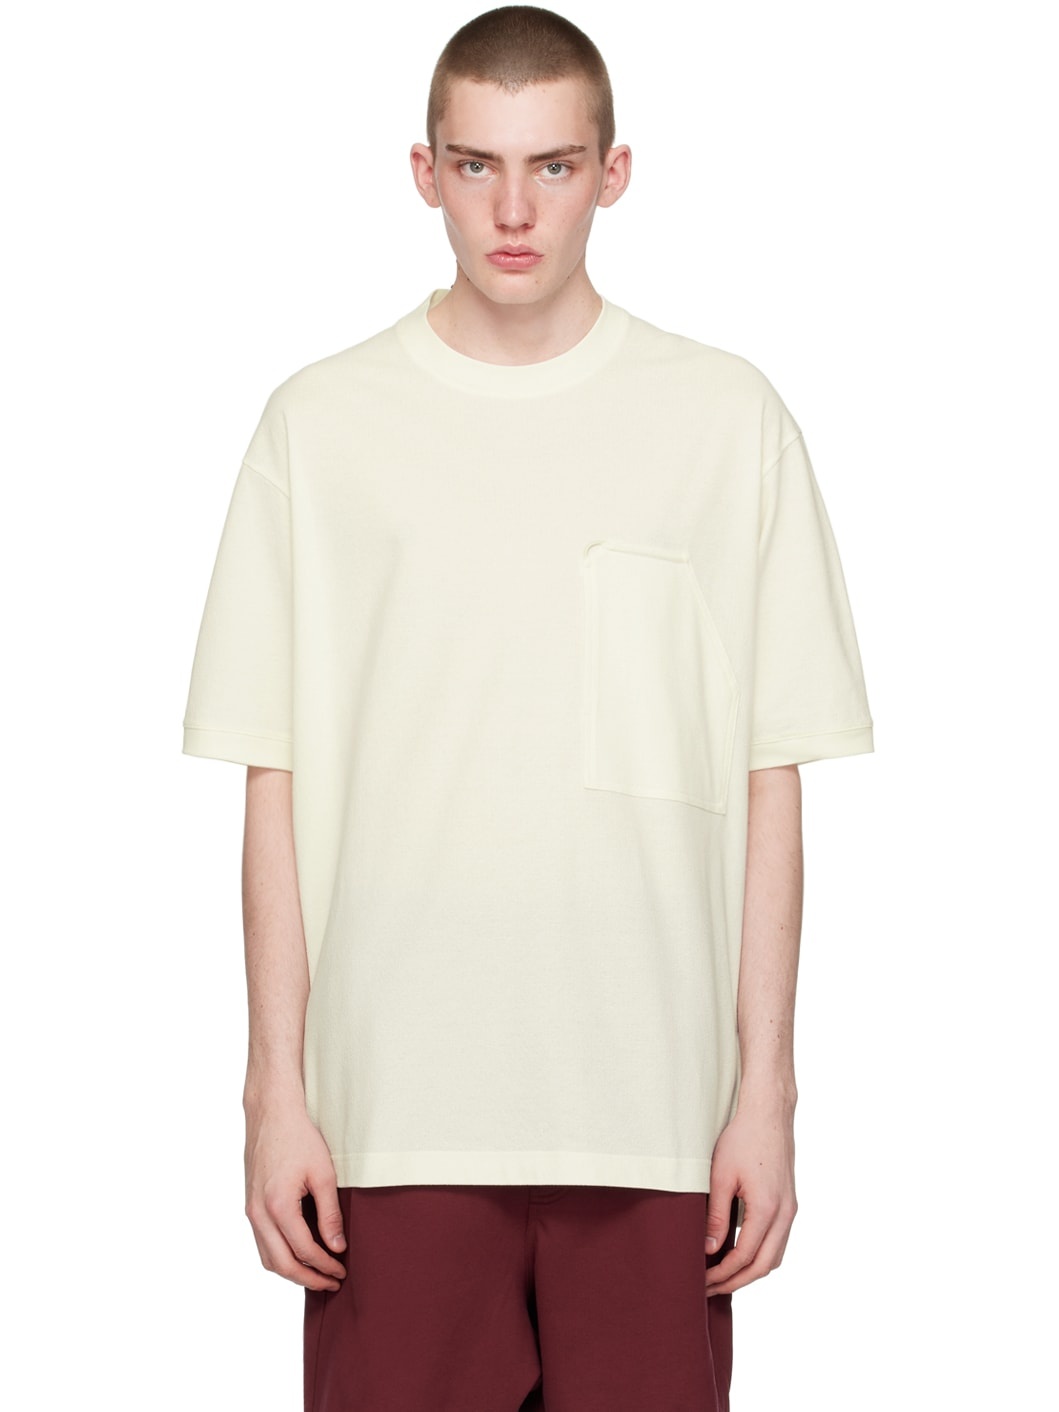 Off-White Workwear T-Shirt - 1